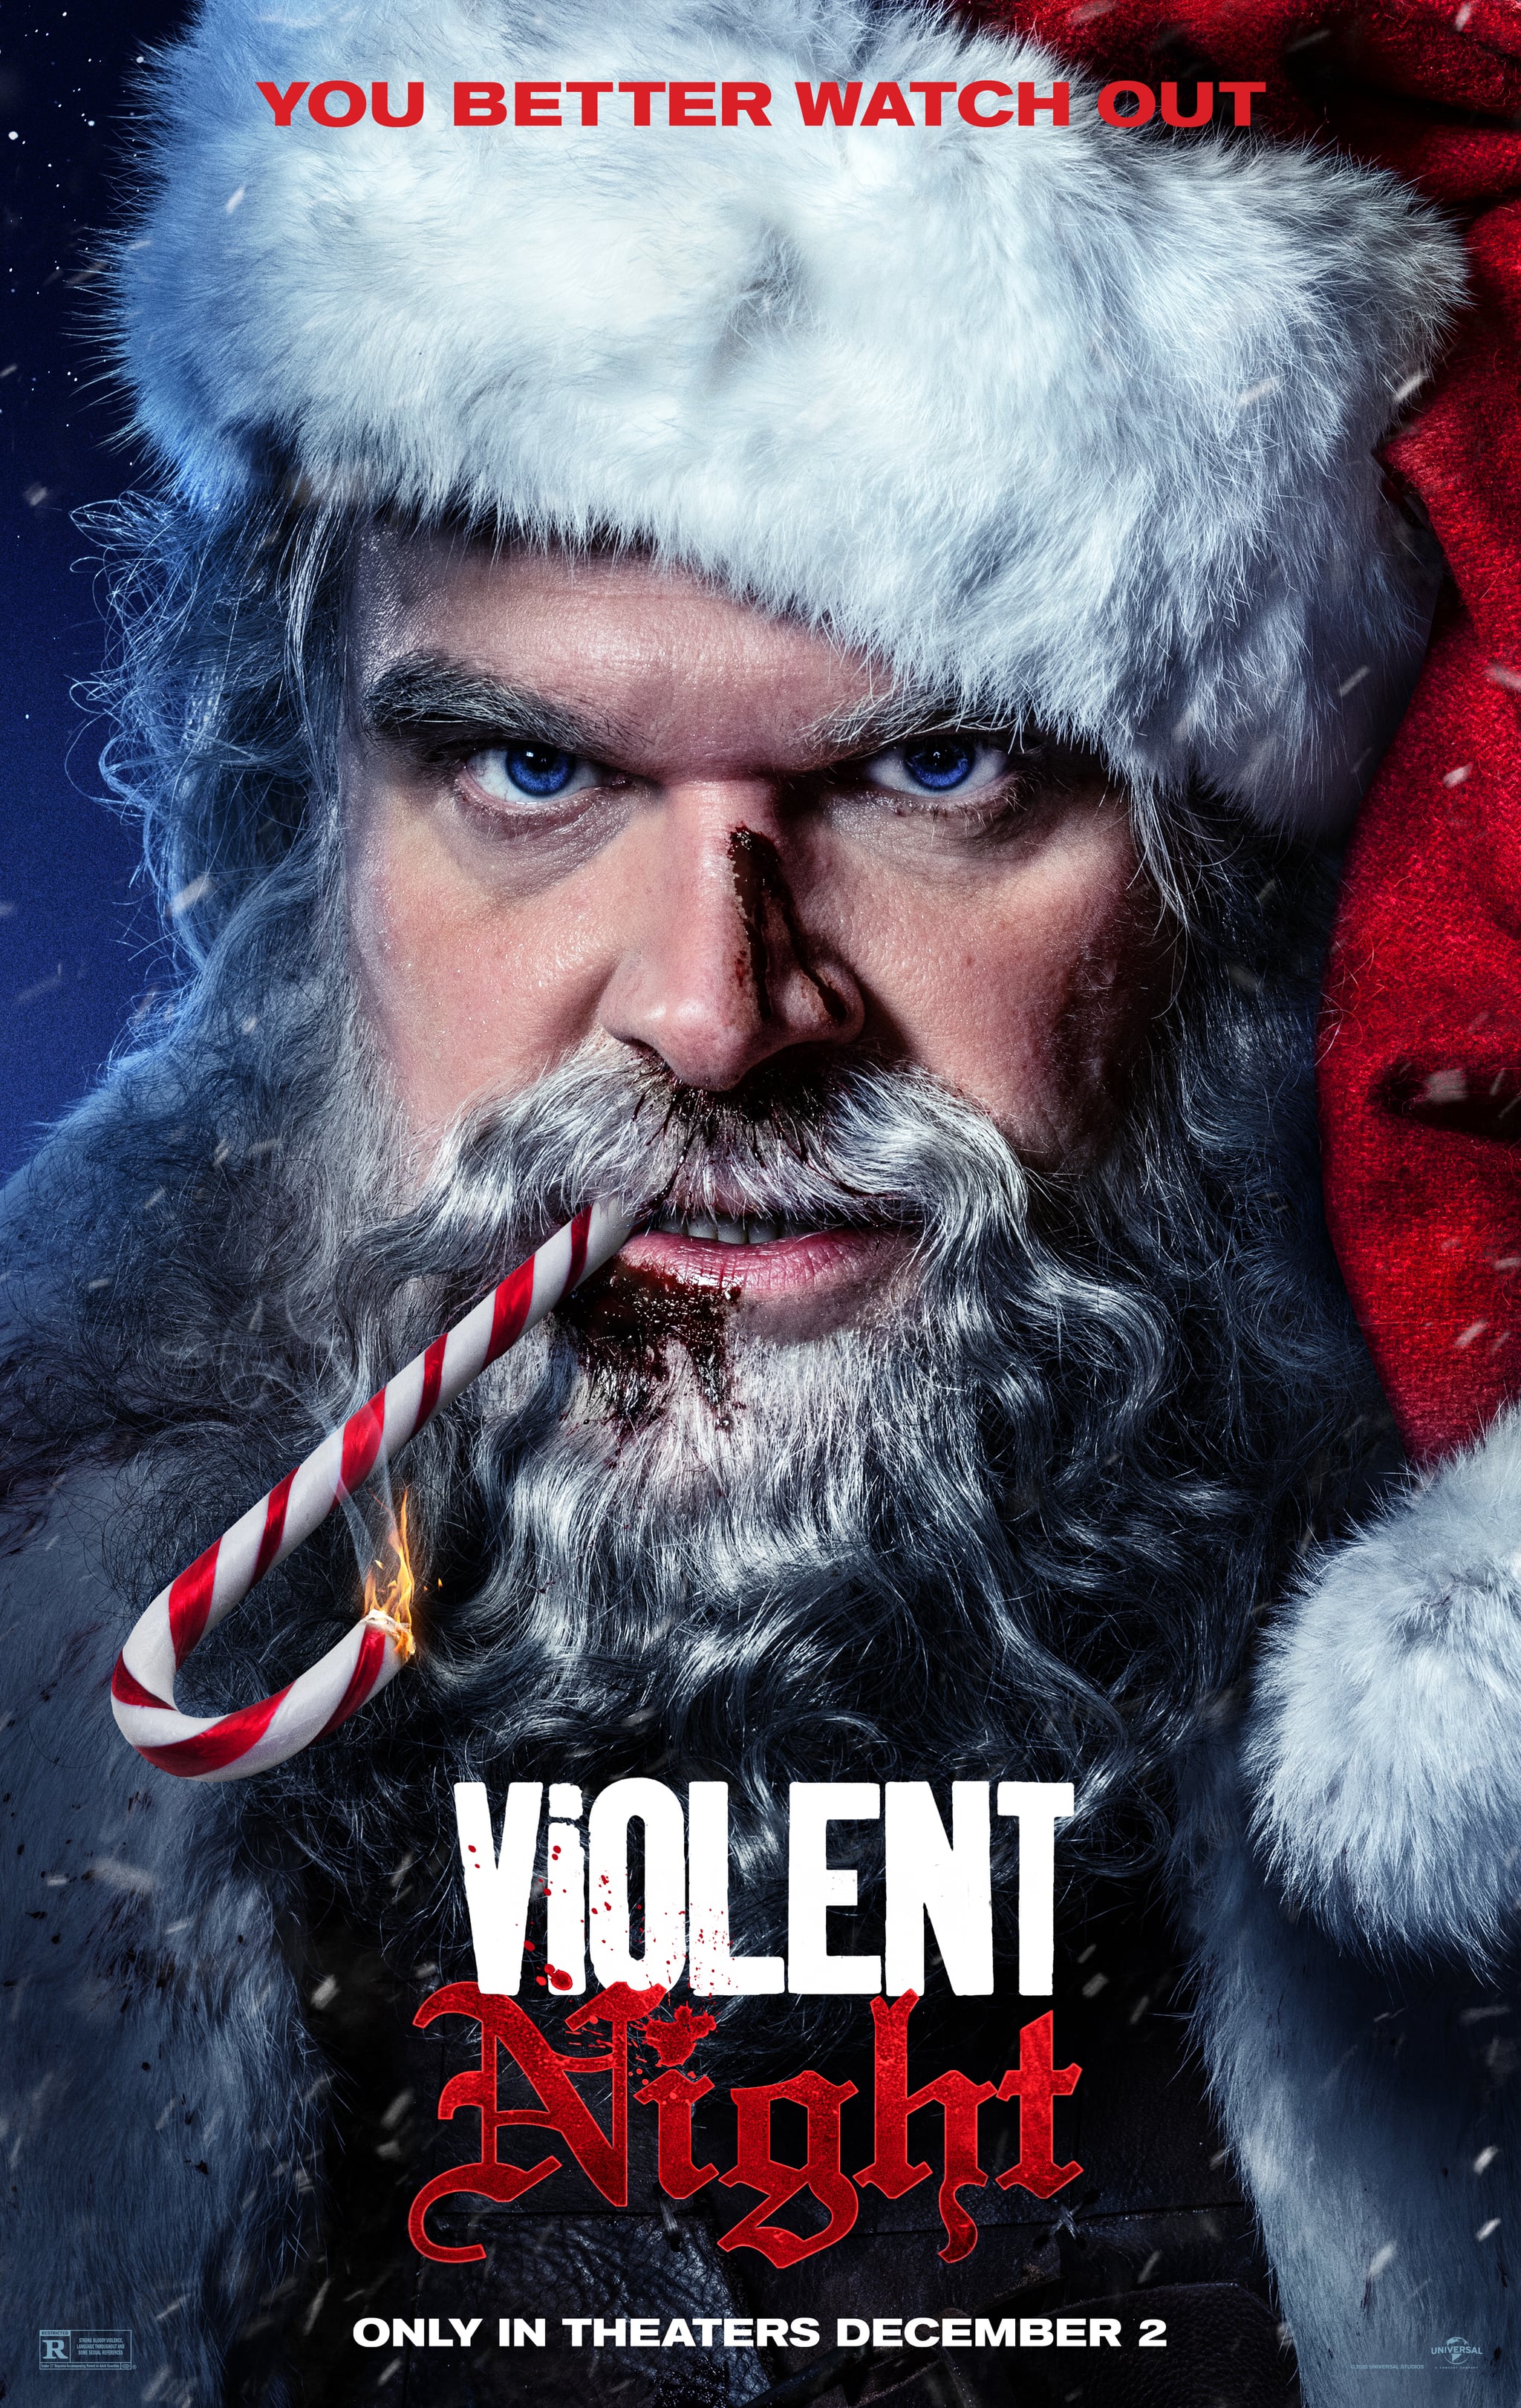 Violent Night poster featuring David Harbour as Santa Claus